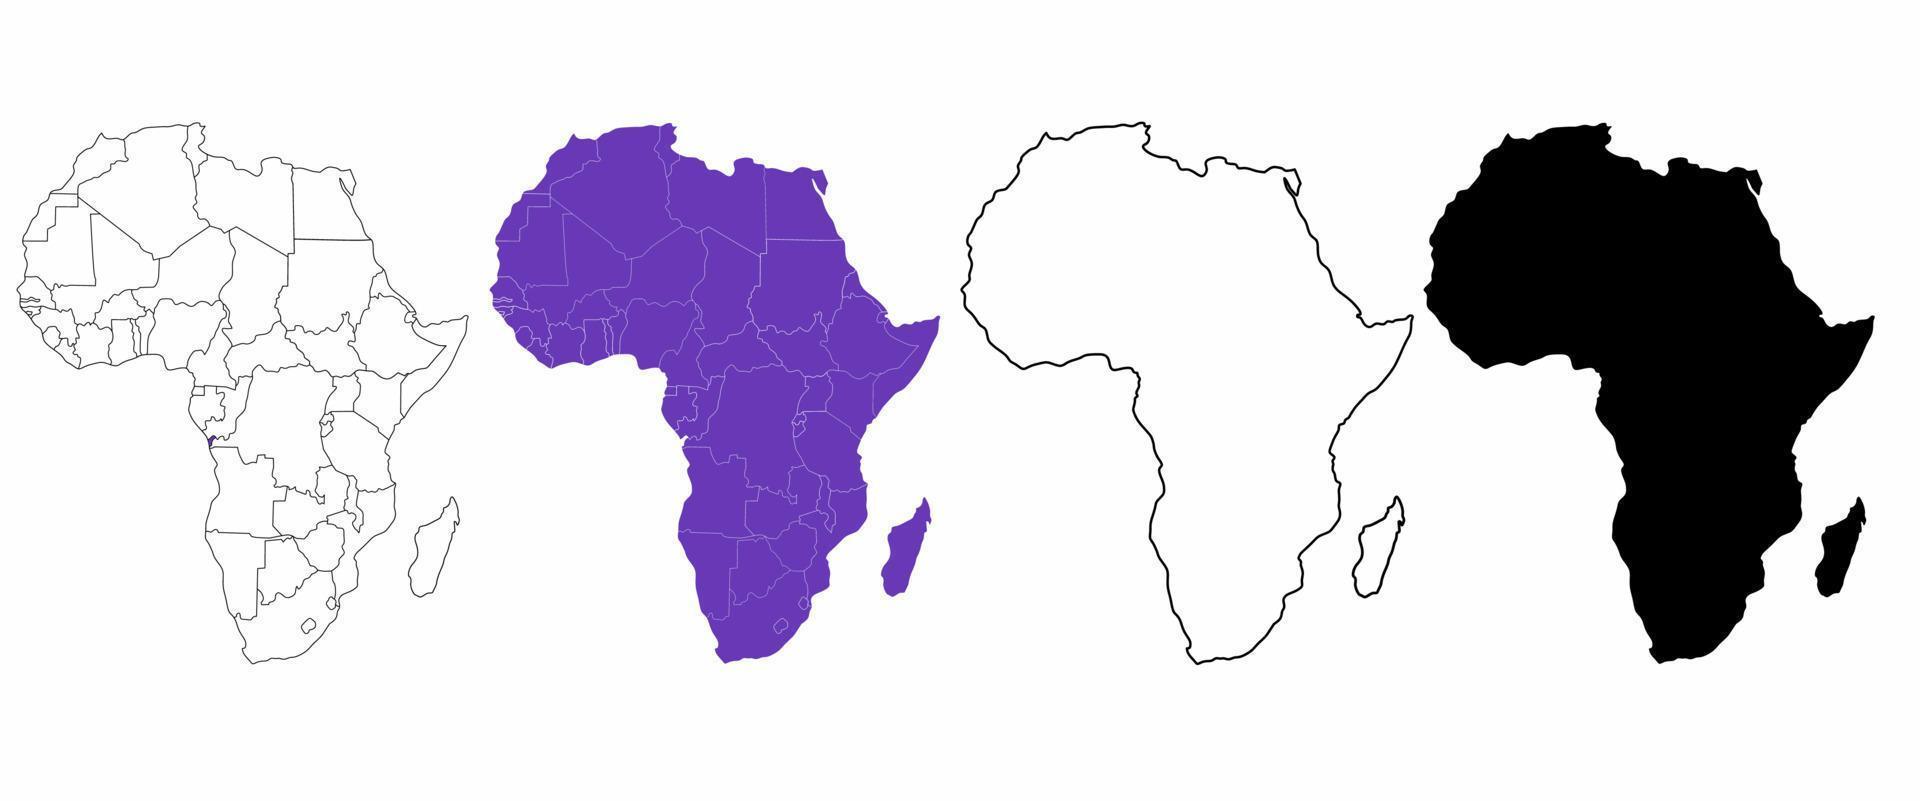 Afrika kontinent karta set isolerad på vit bakgrund vektor